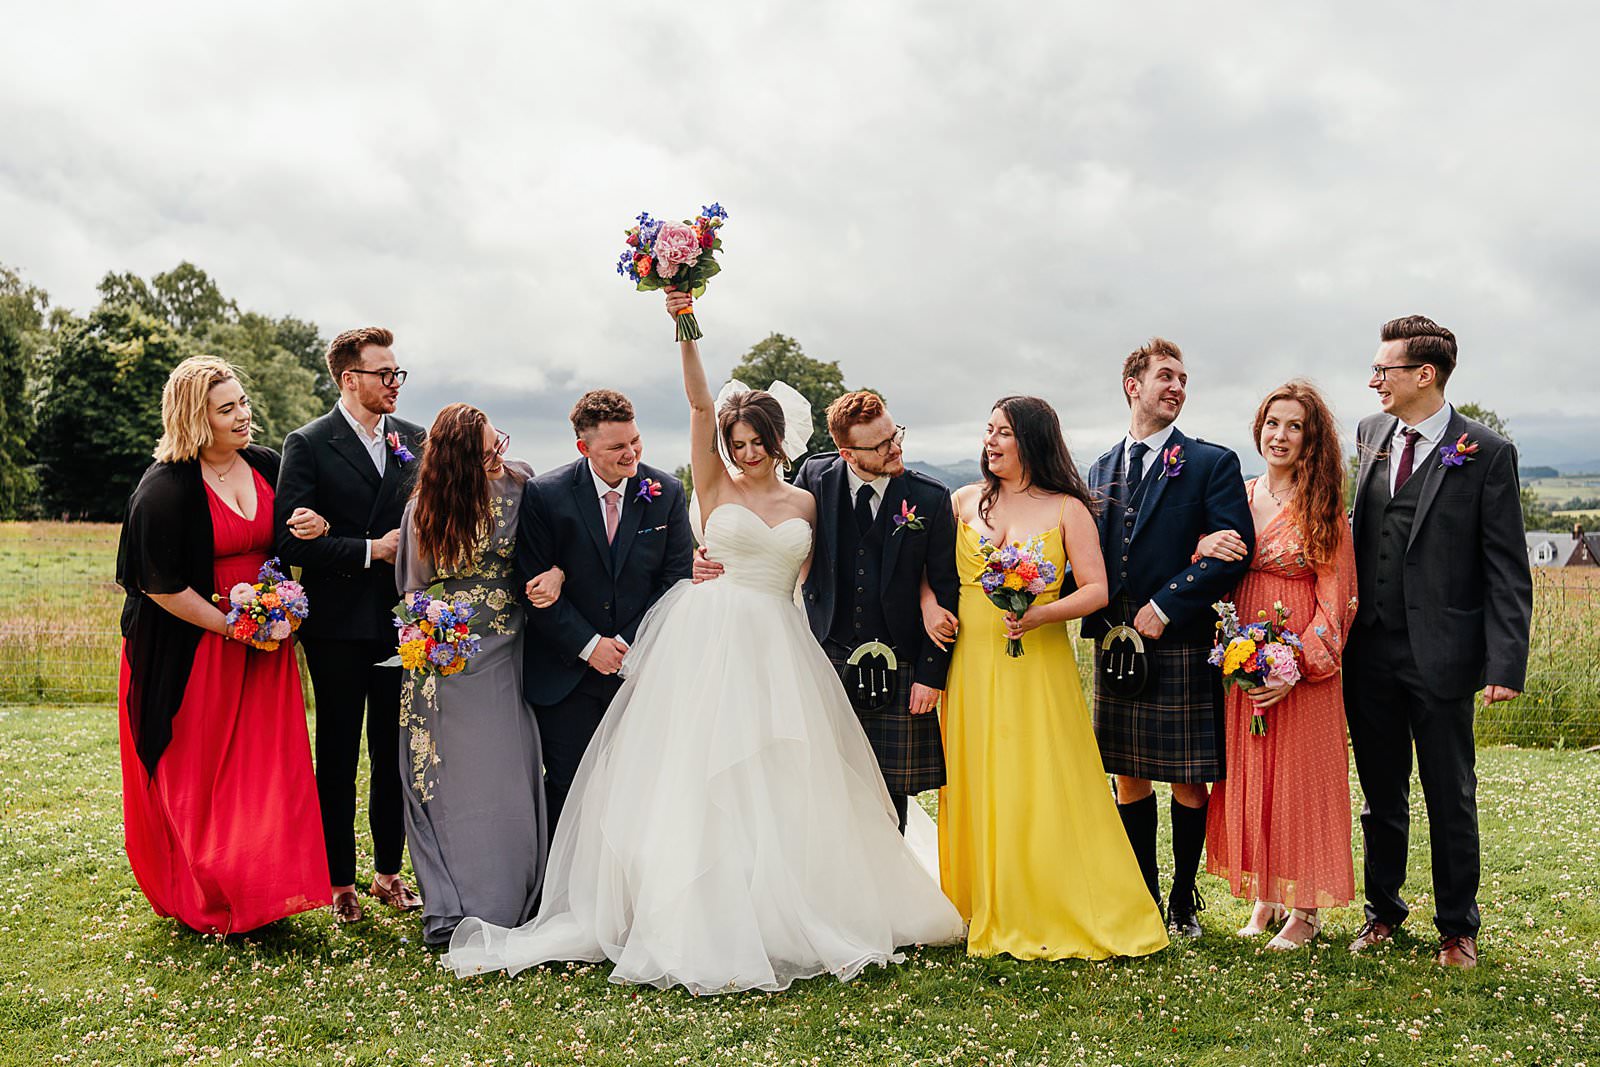 colourful wedding photographer glasgow joy story fun wedding photography scotland